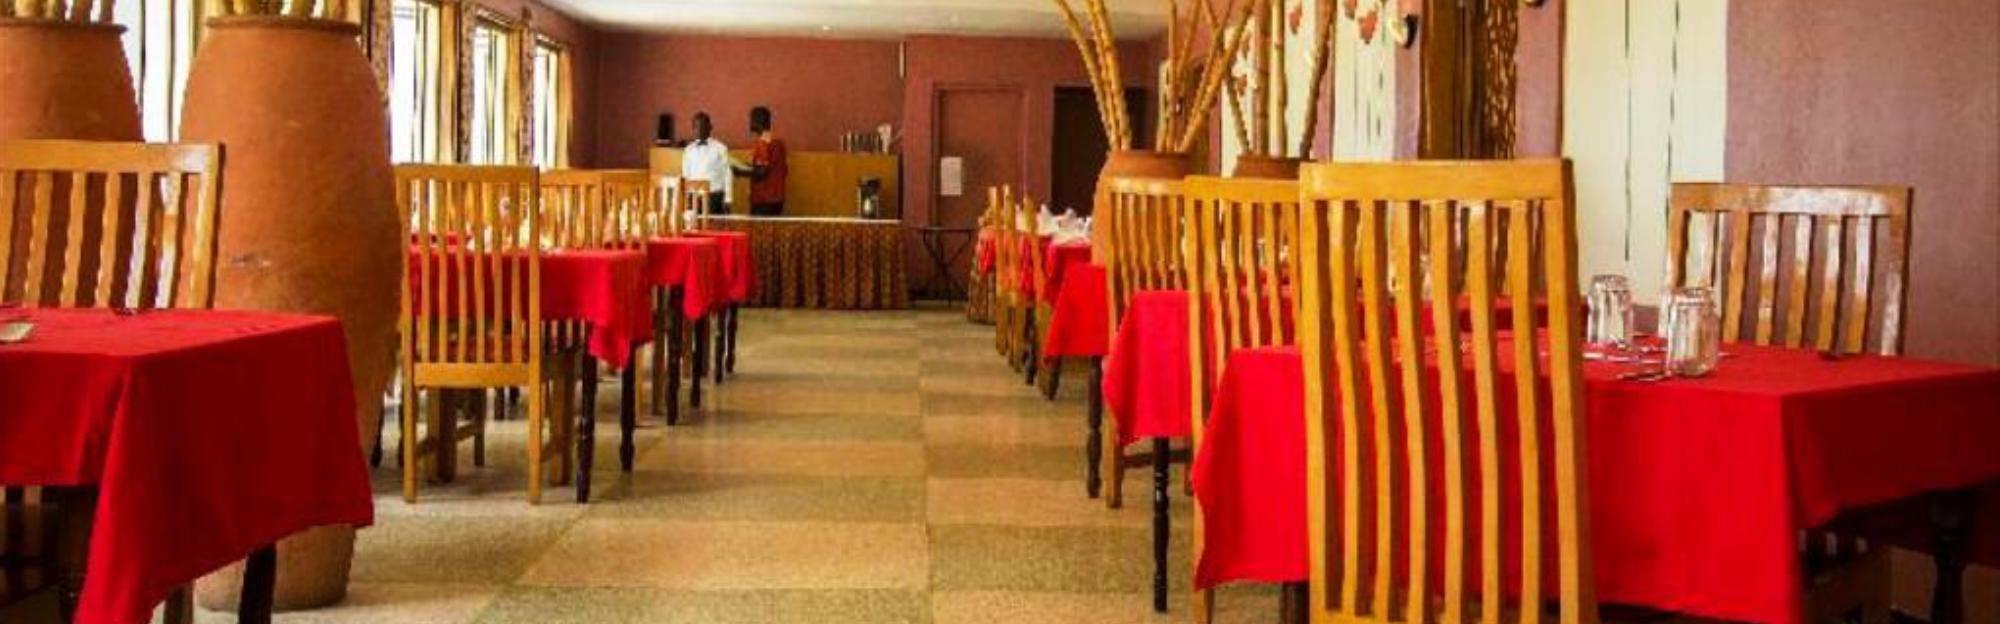 Mount Elgon Hotel & Spa Conferences & Weddings